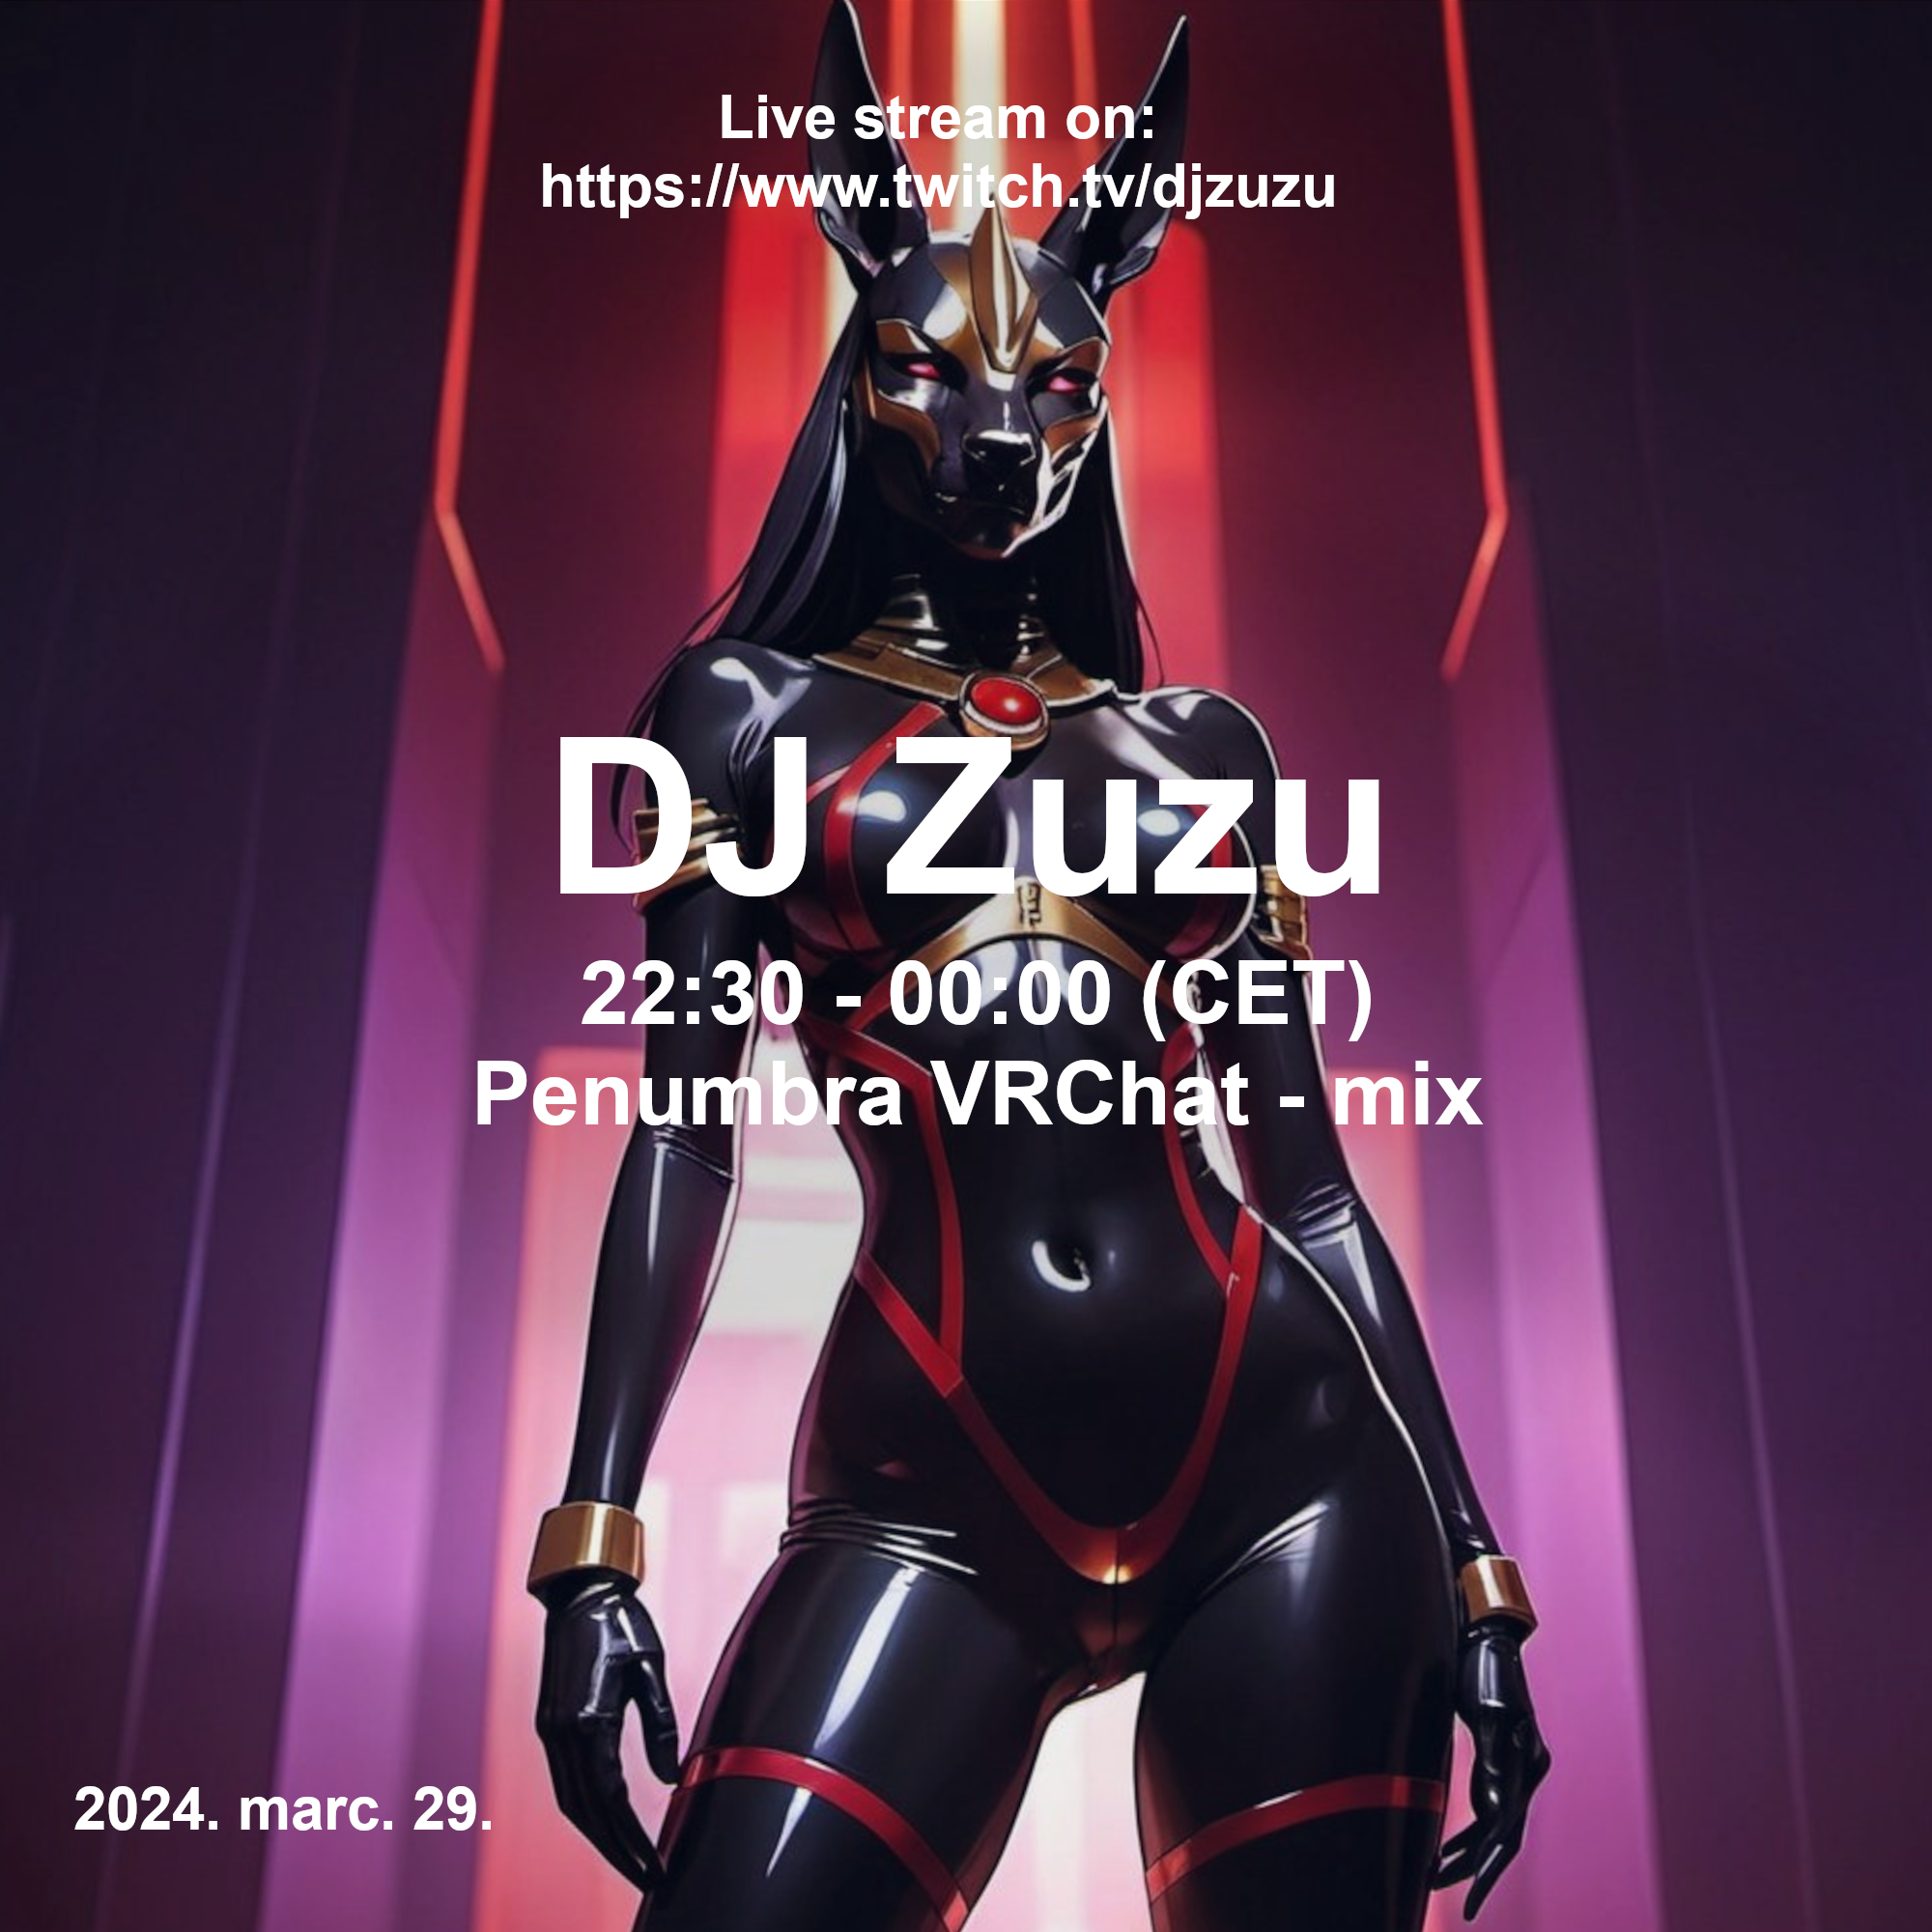 Dj Zuzu Penumbra VRChat mix event flyer 20240329